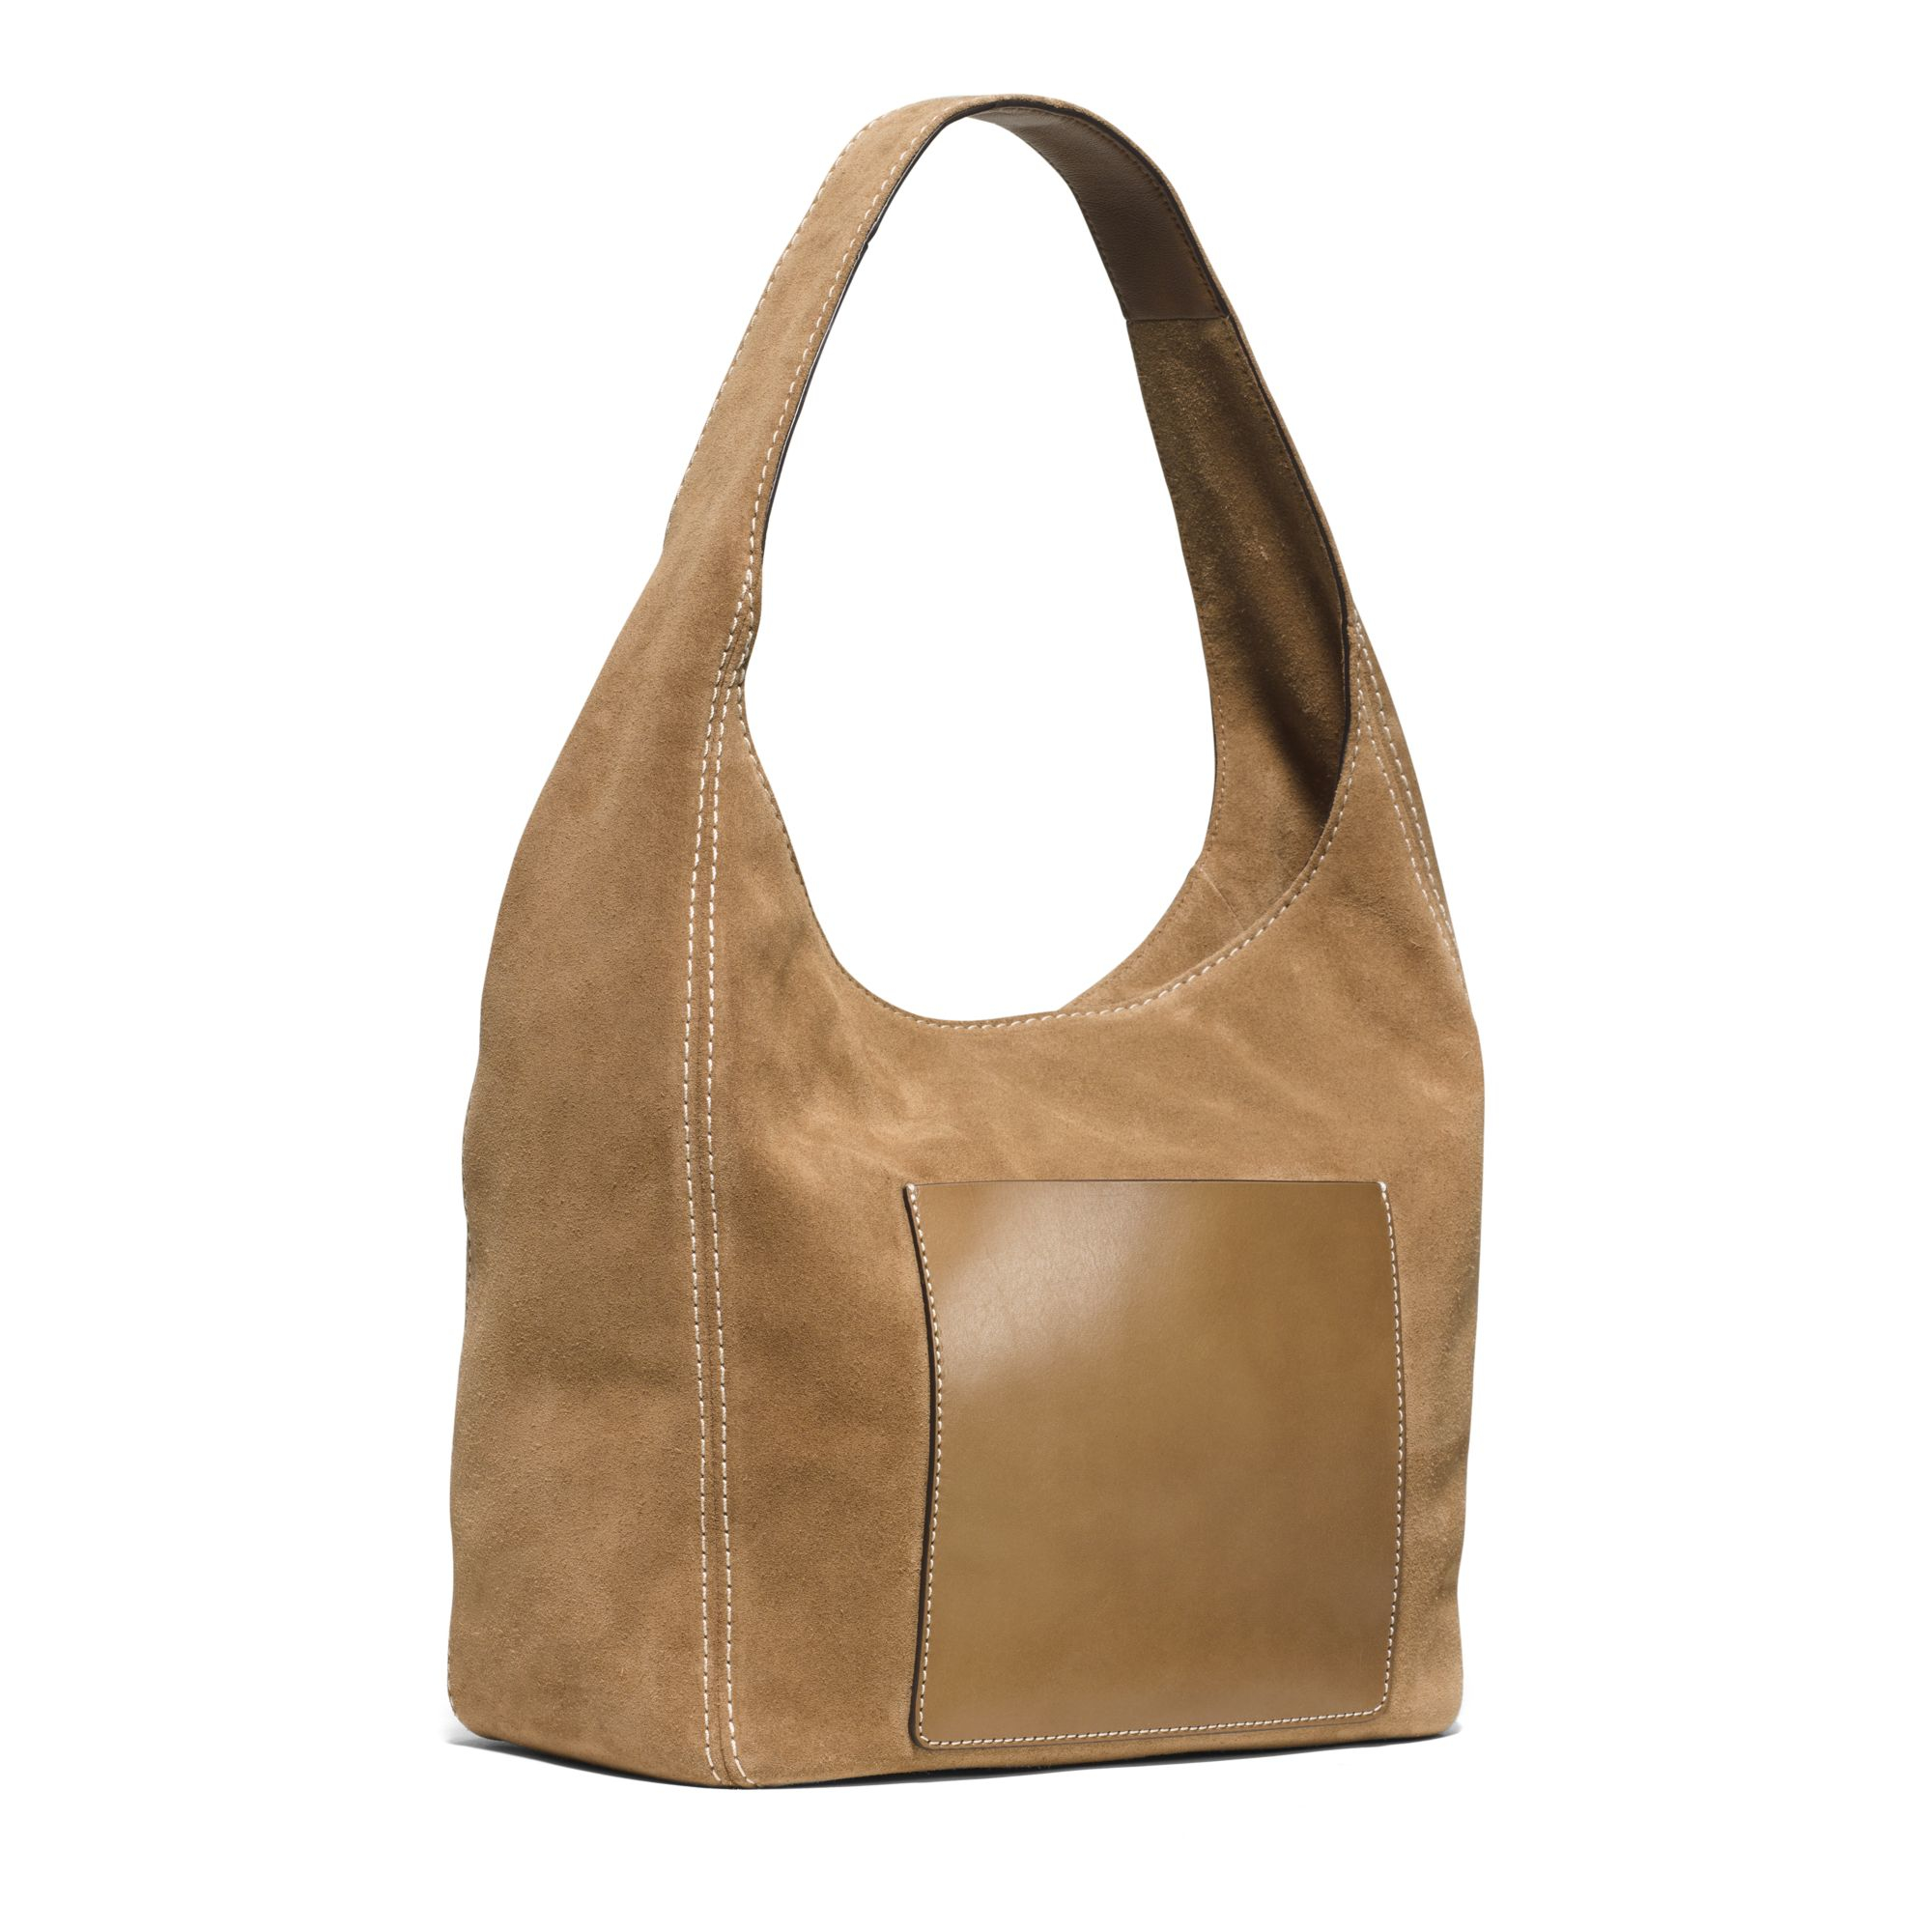 Lyst - Michael Kors Lena Large Suede Shoulder Bag in Brown